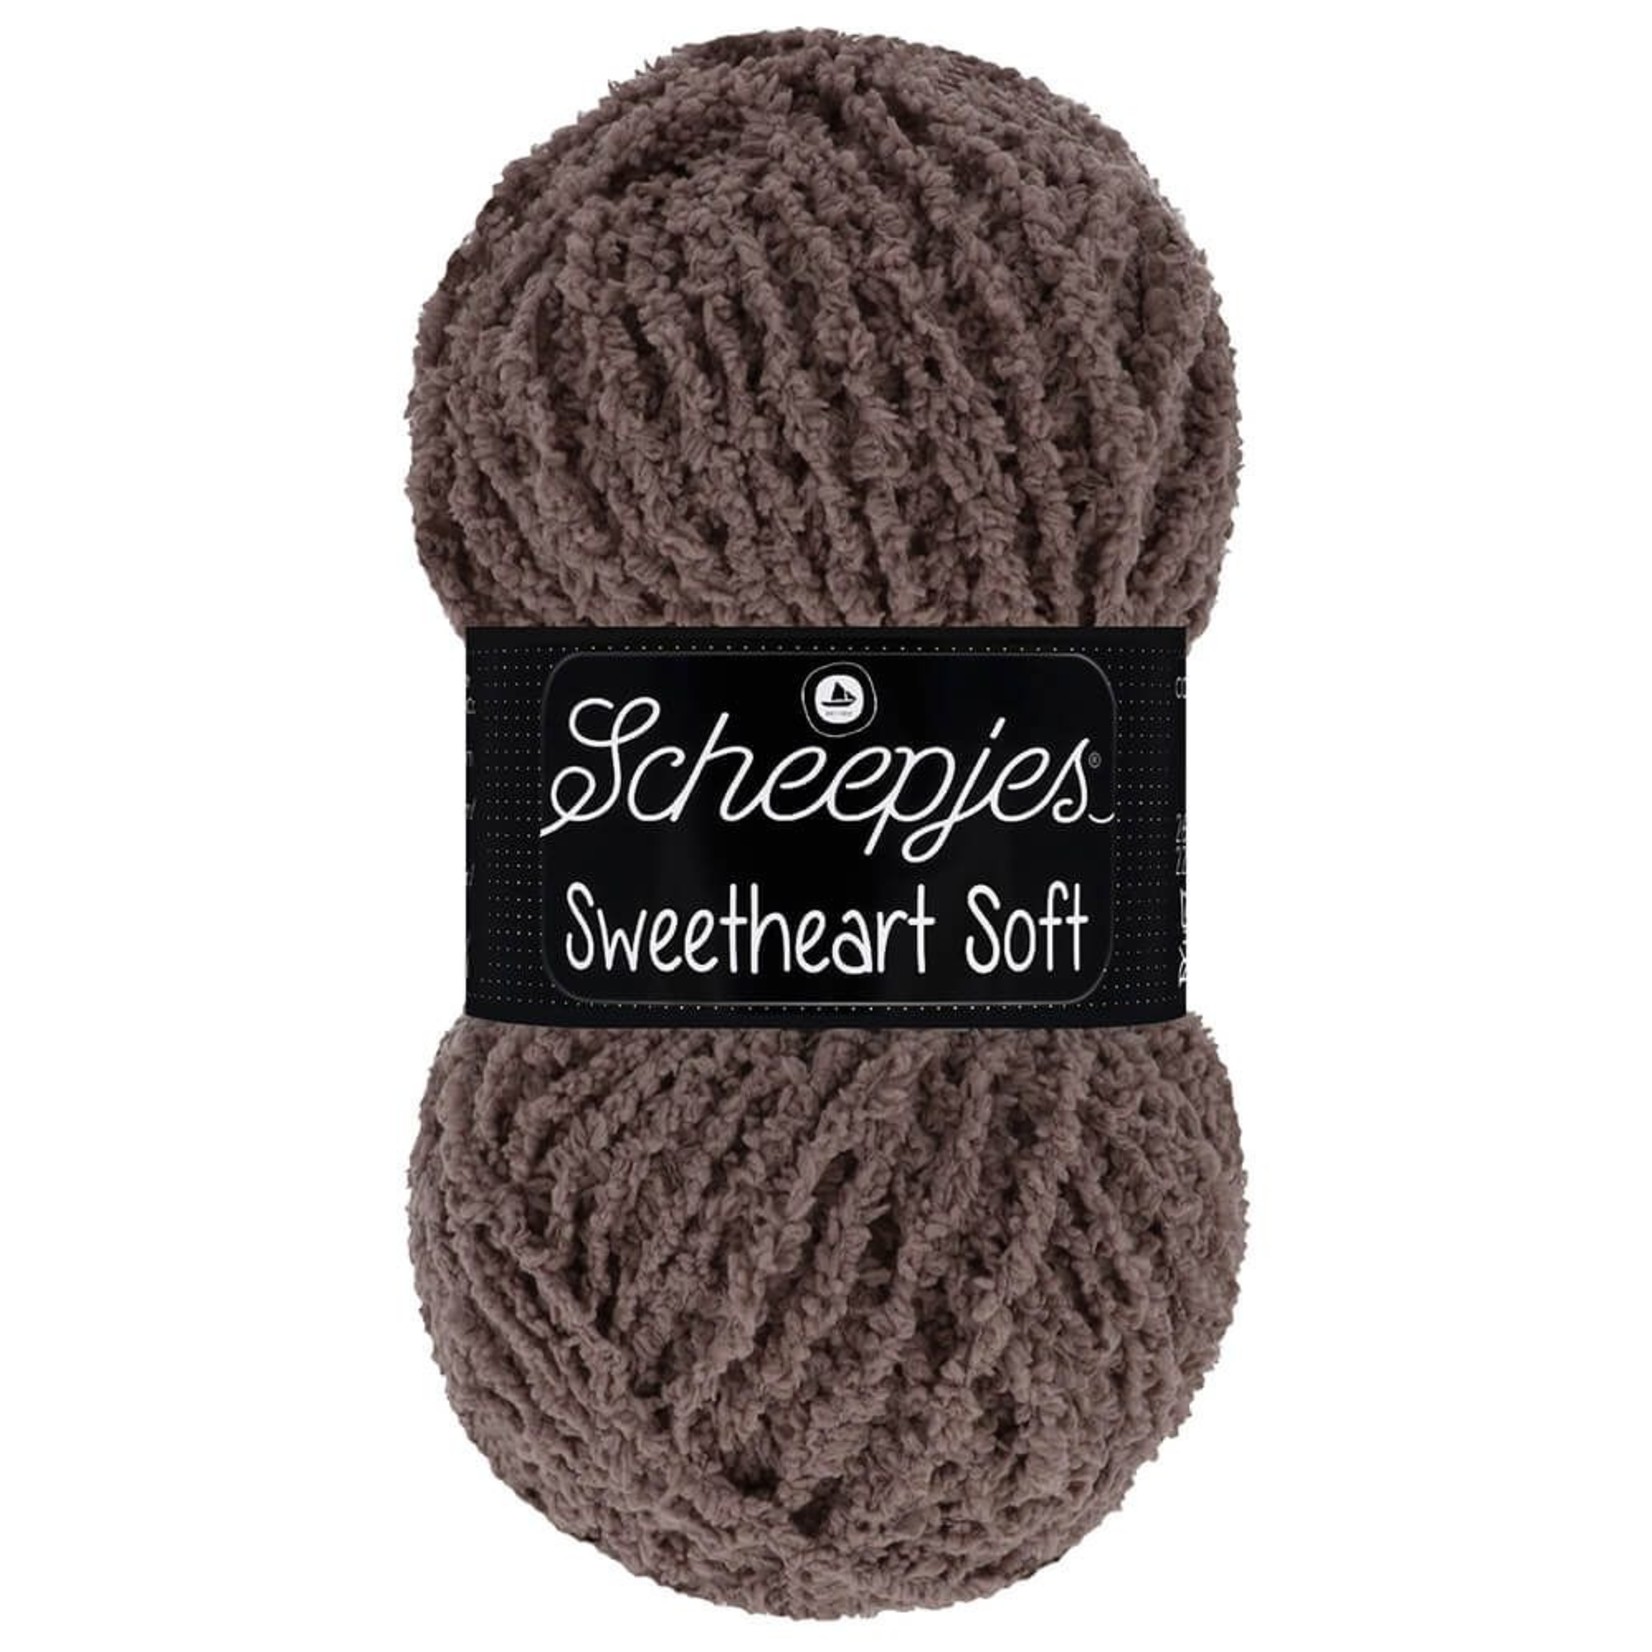 Scheepjes Sweetheart Soft 27 Taupe